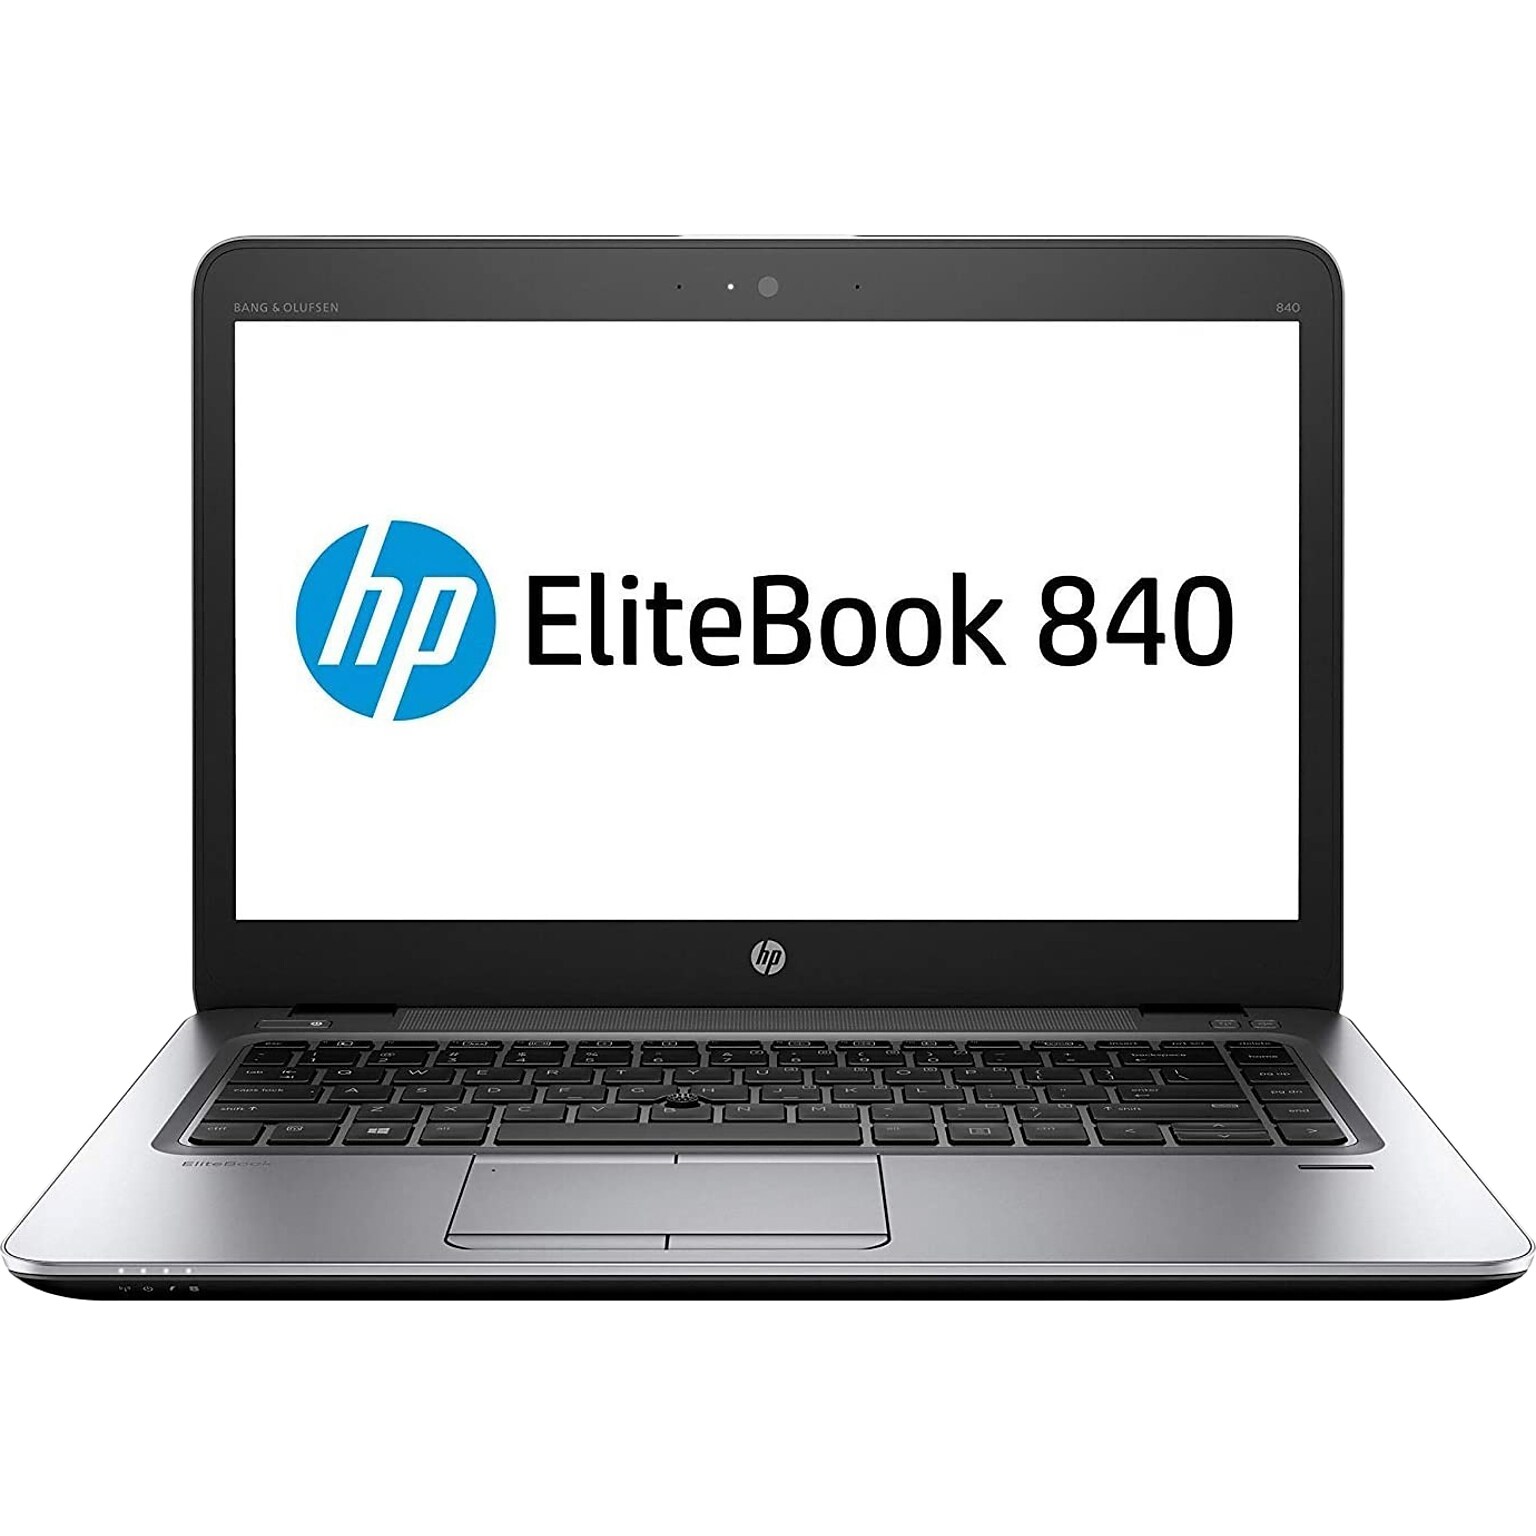 HP EliteBook 840 G3 14 Refurbished Laptop, Intel Core i7, 16GB Memory, 256GB SSD, Windows 10 Pro (T6F46UT#ABA)